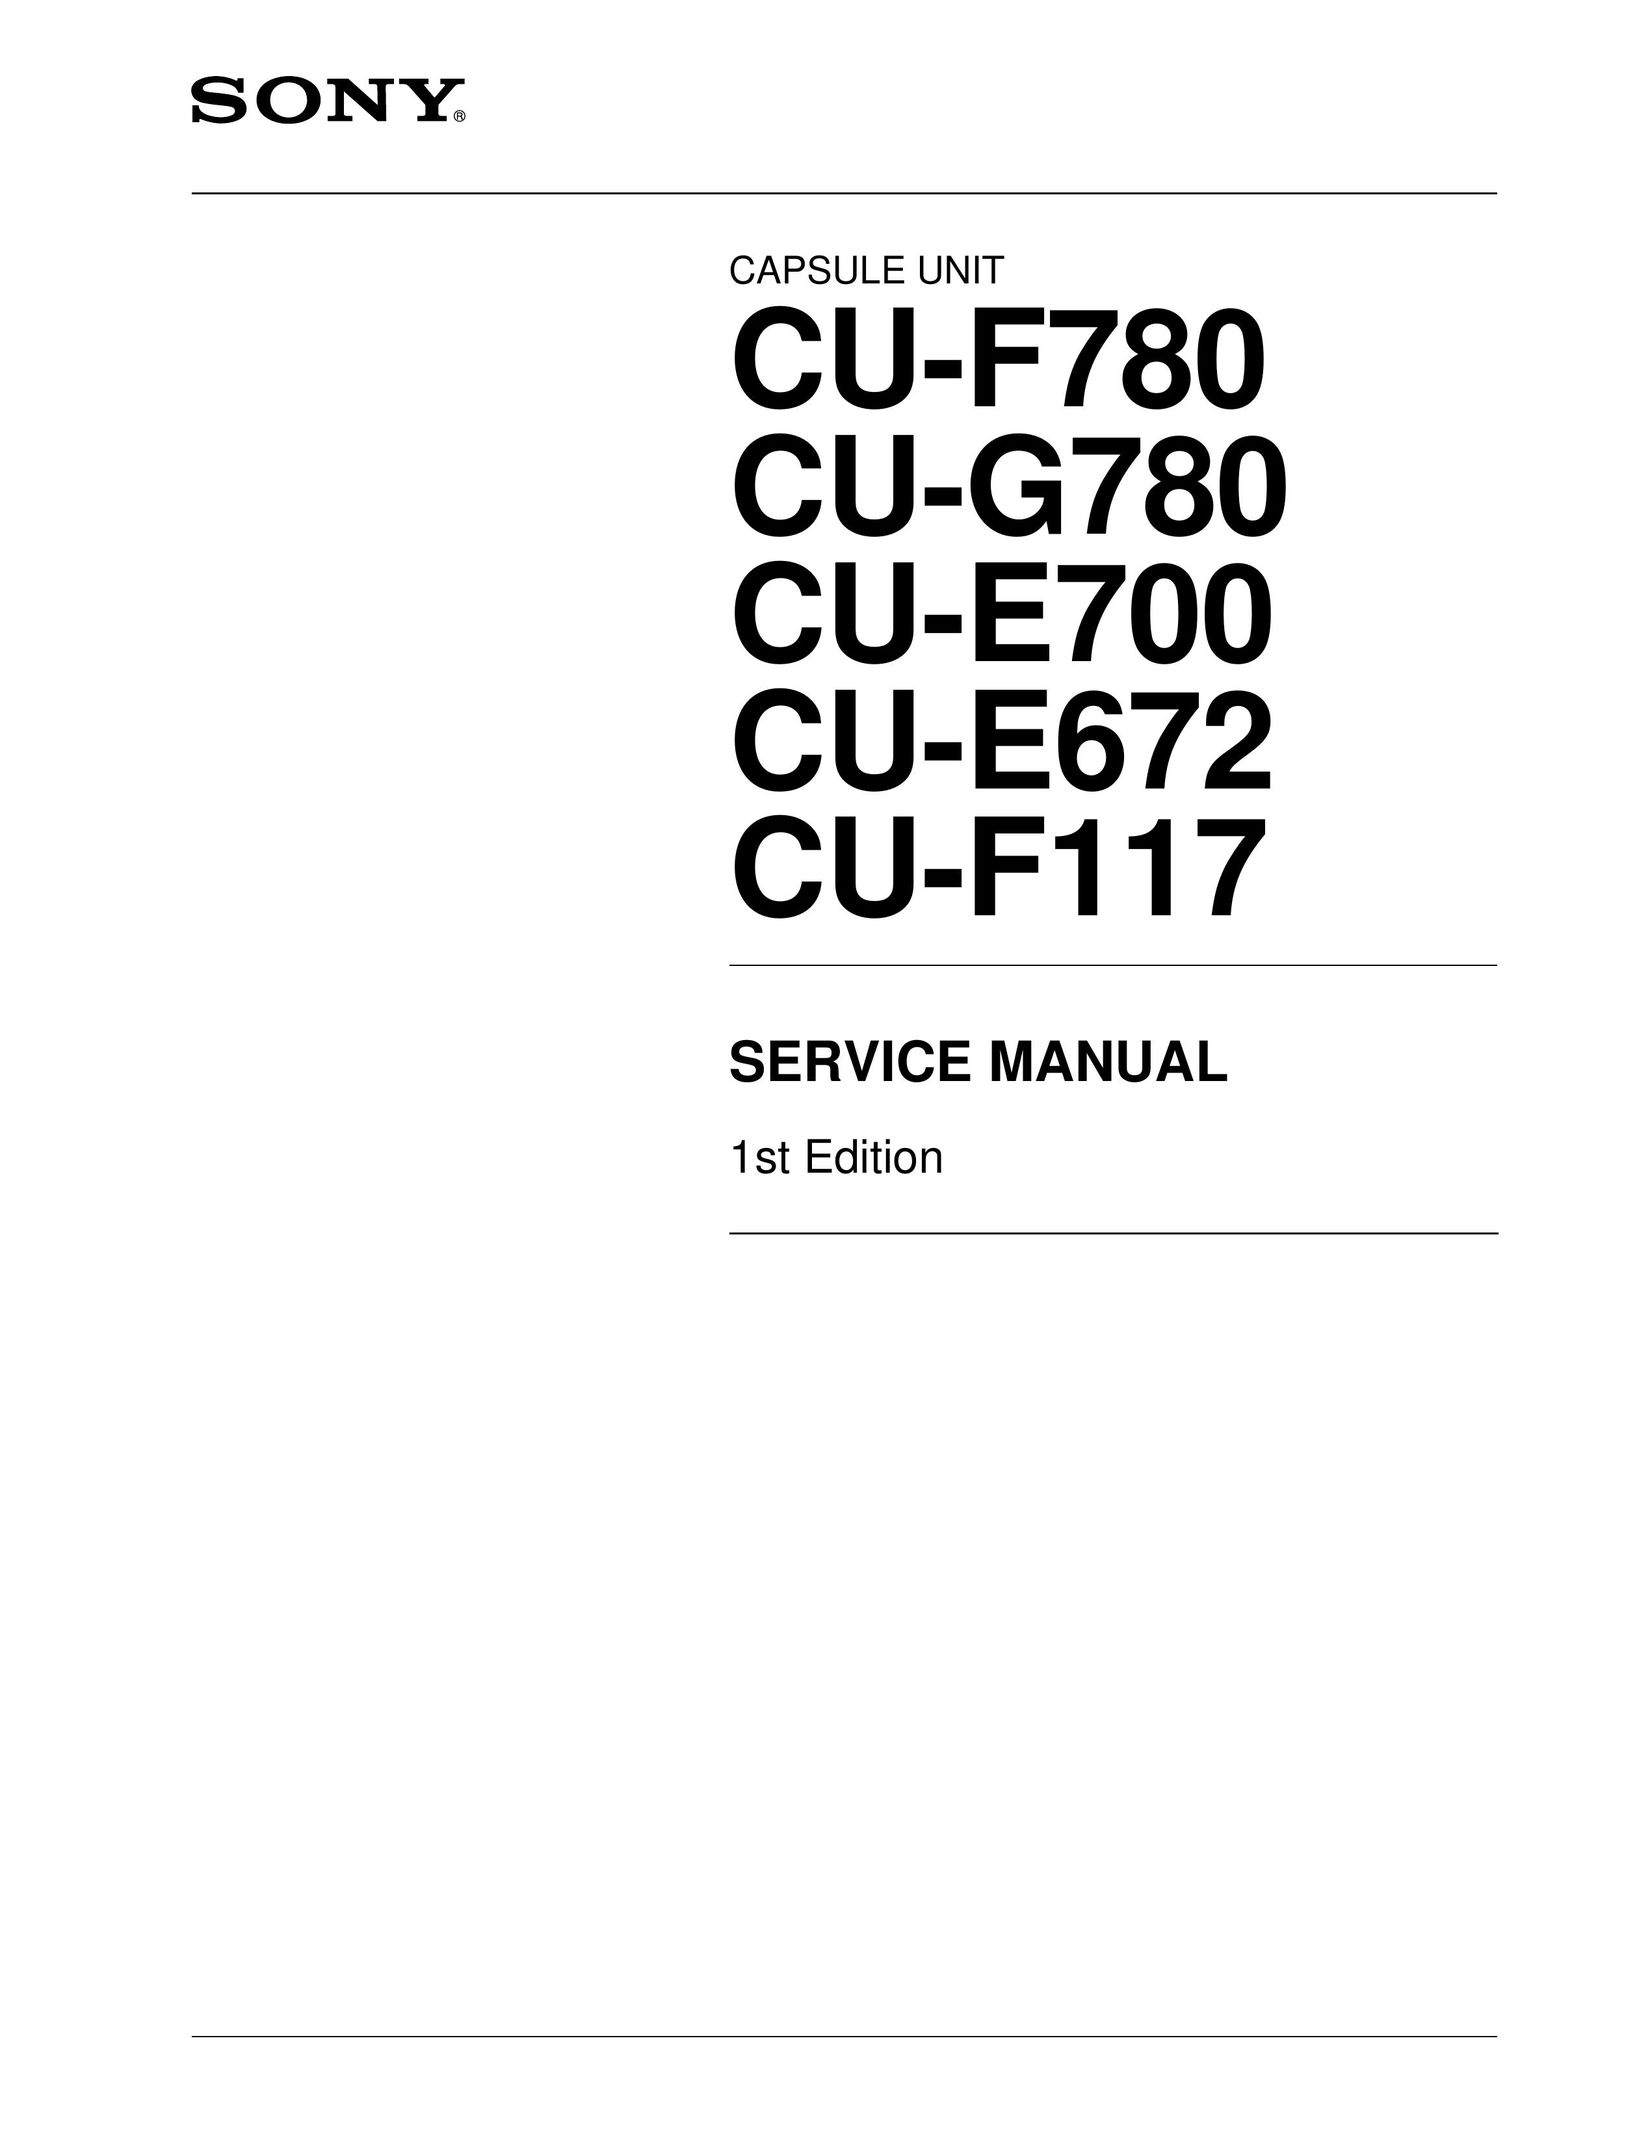 Sony CU-F780 Satellite Radio User Manual